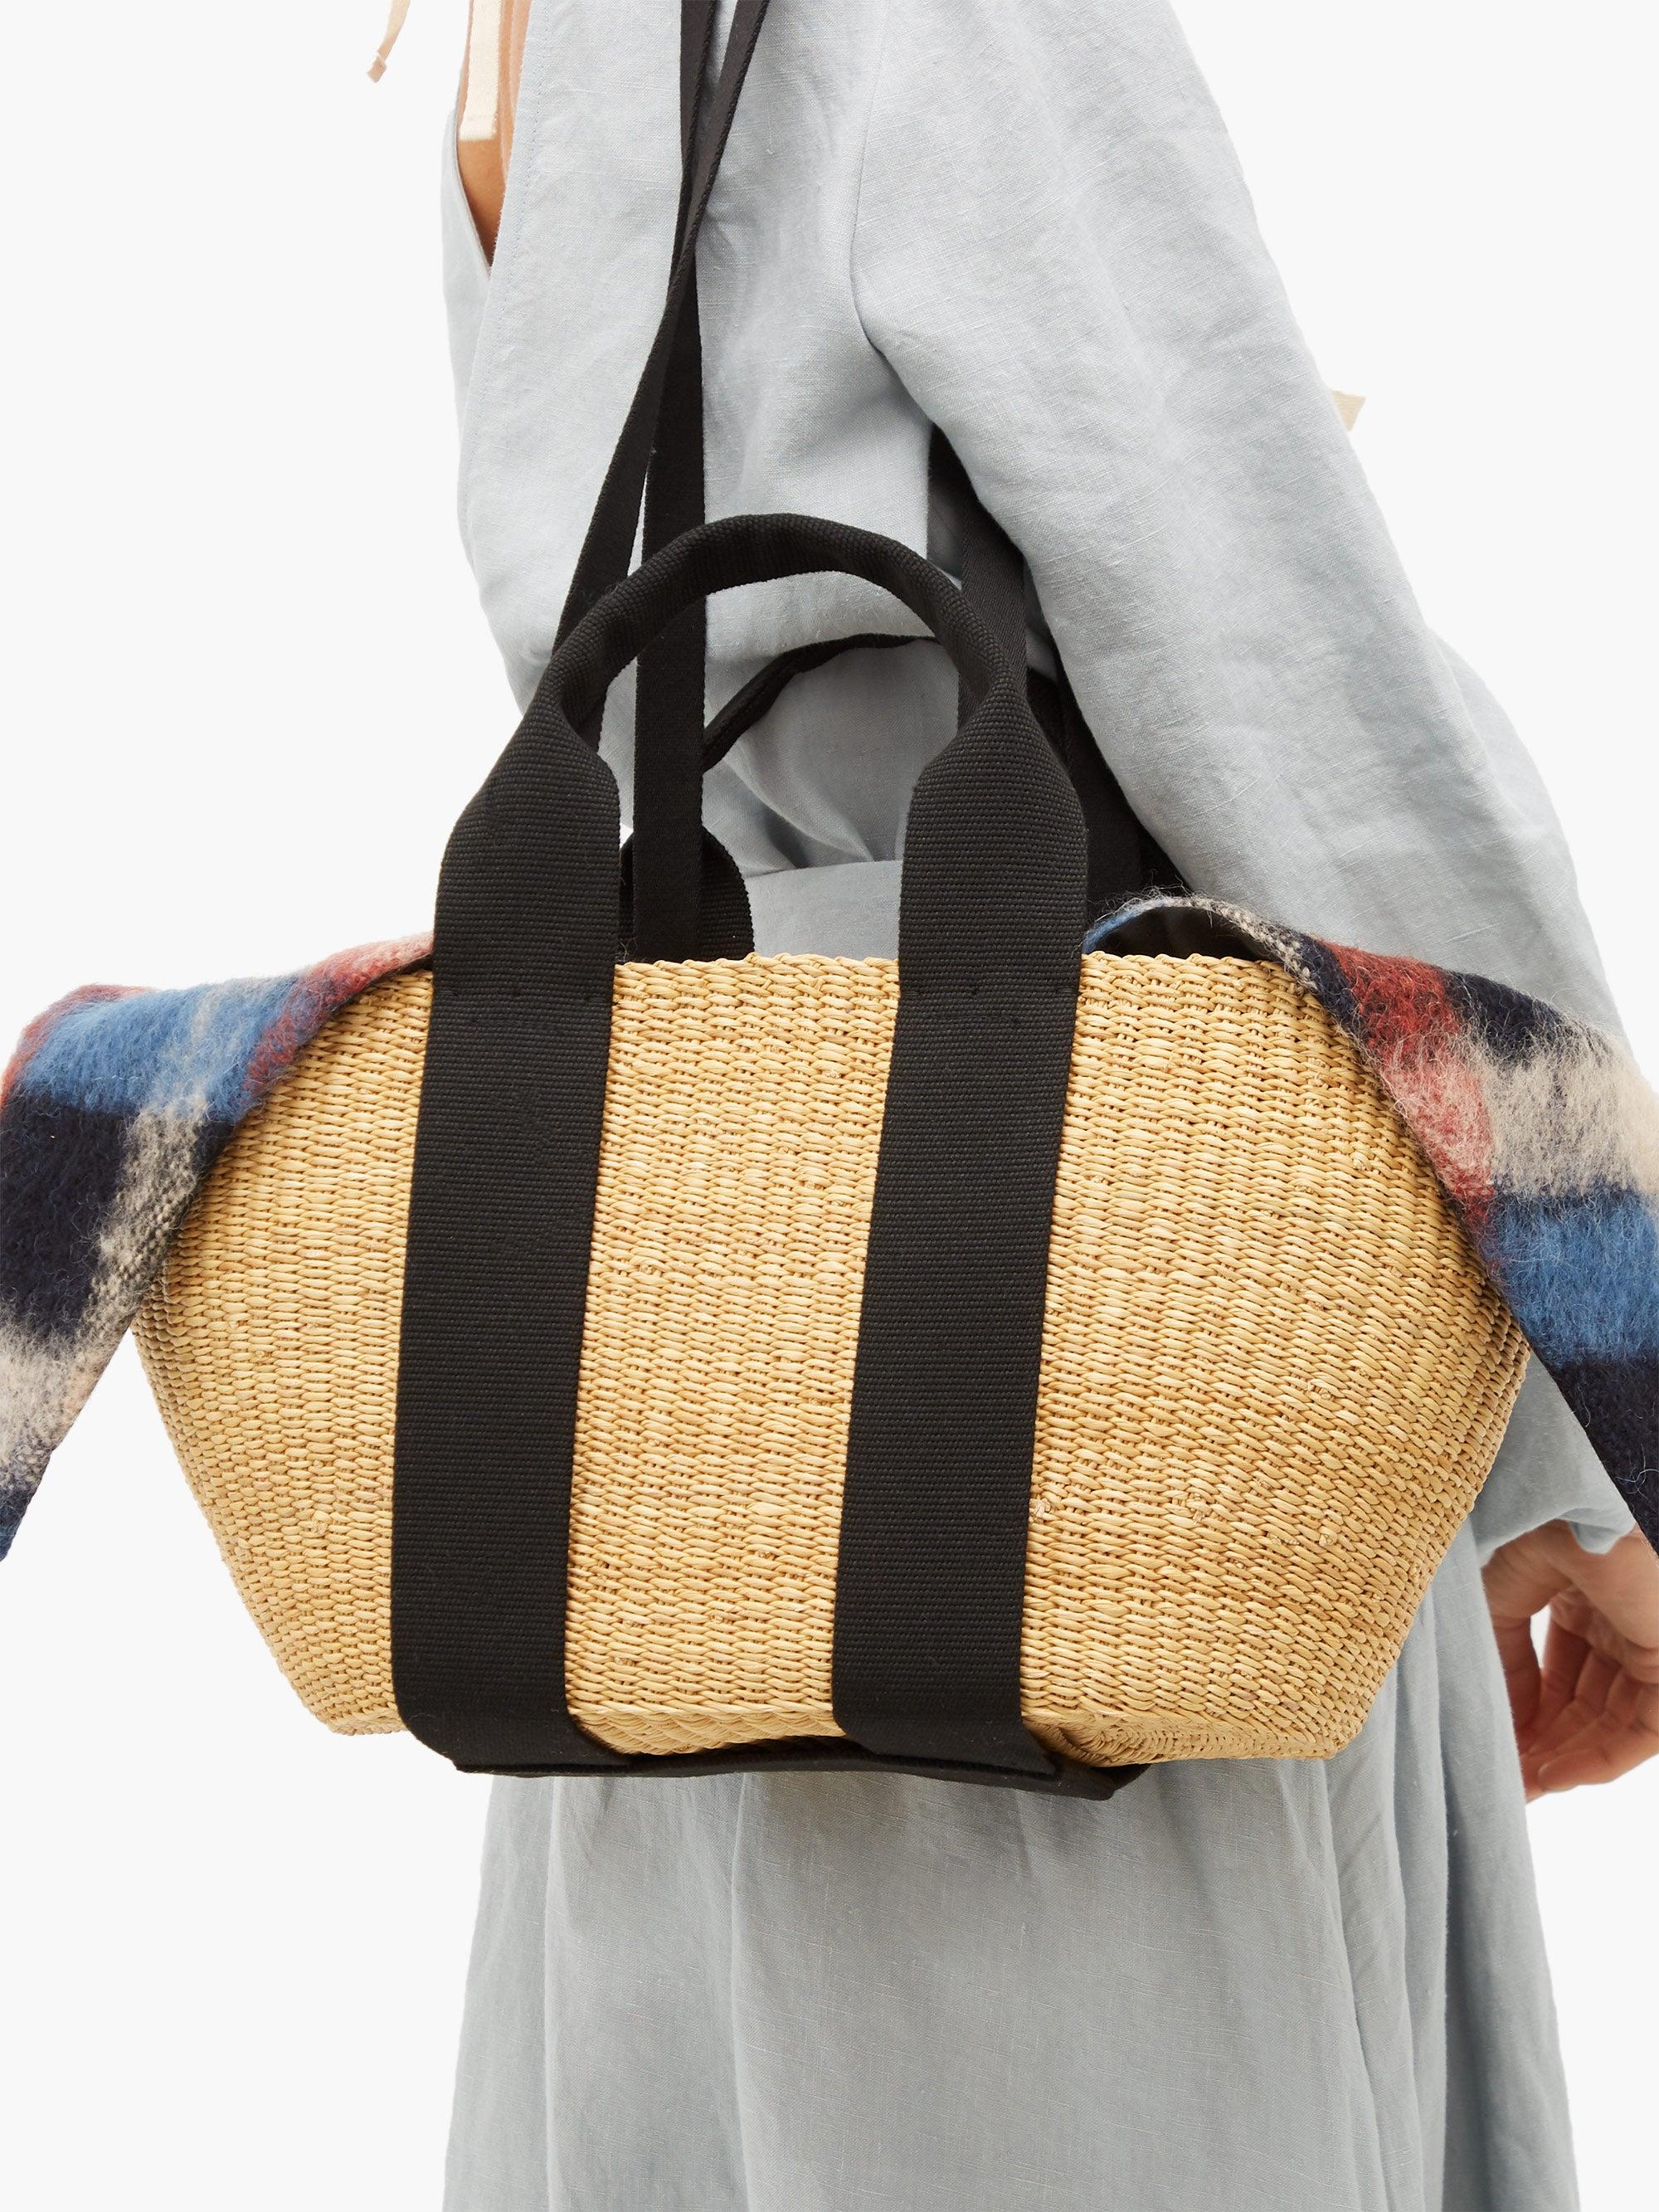 Muuñ George Woven Straw And Wool Basket Bag in Black - Lyst